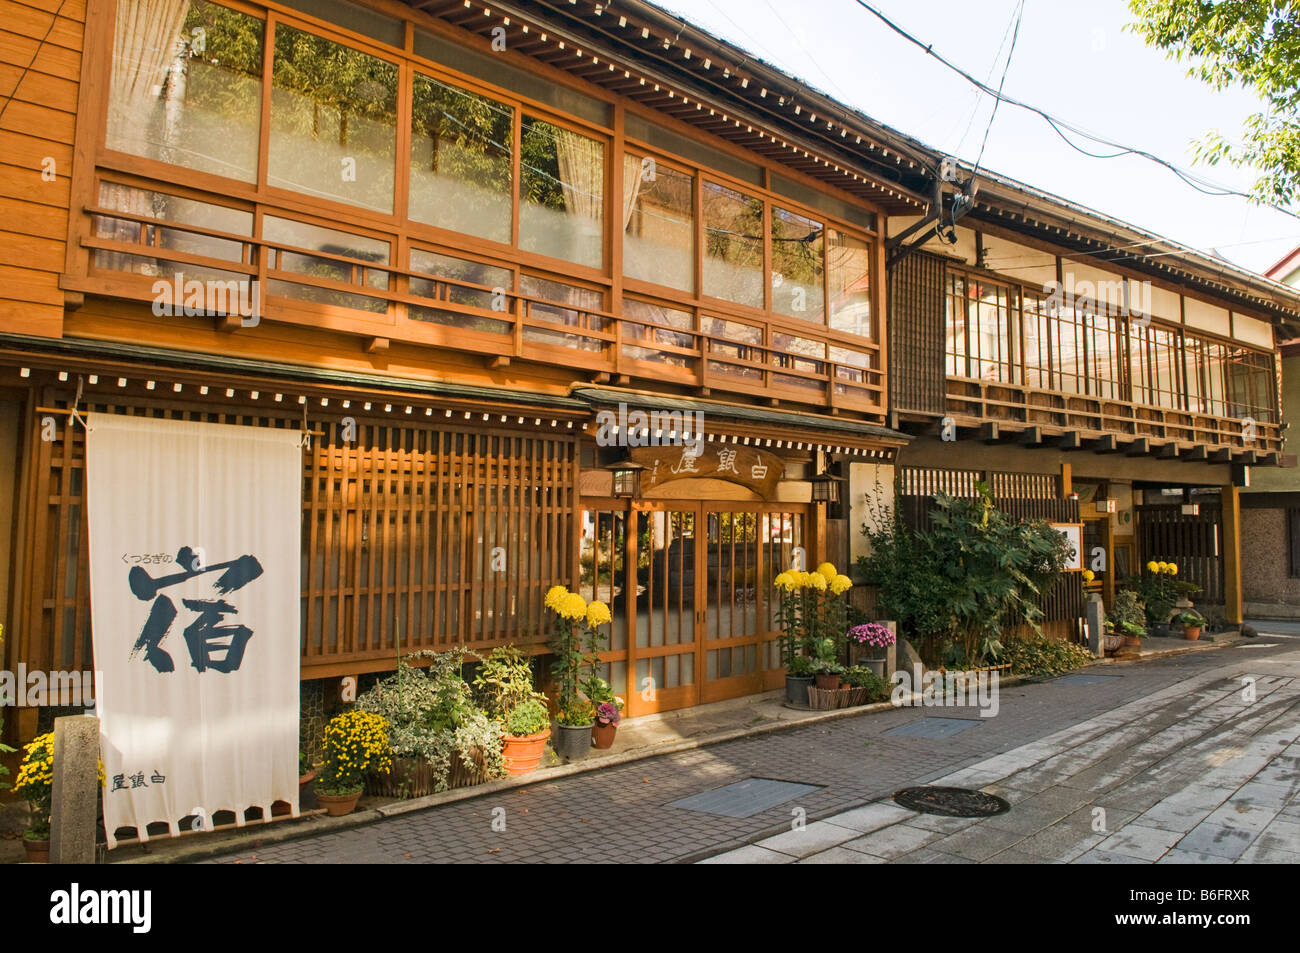 Ryokans line the typical Japanese town of Shibu Onsen Nagano Japan Stock Photo